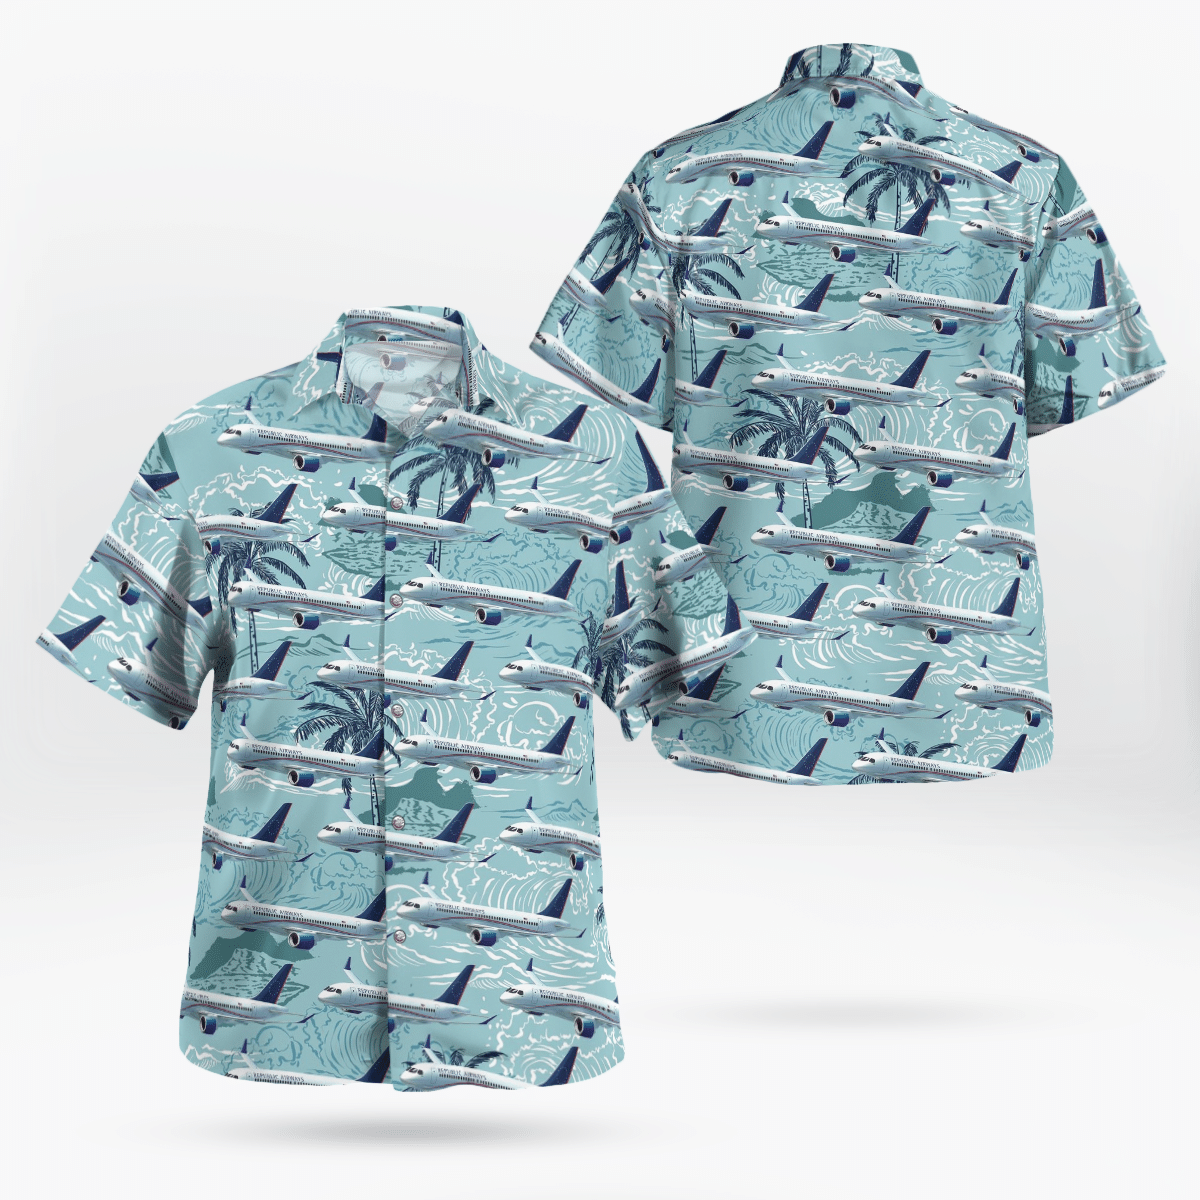 Summer so cool with top new hawaiian shirt below 51